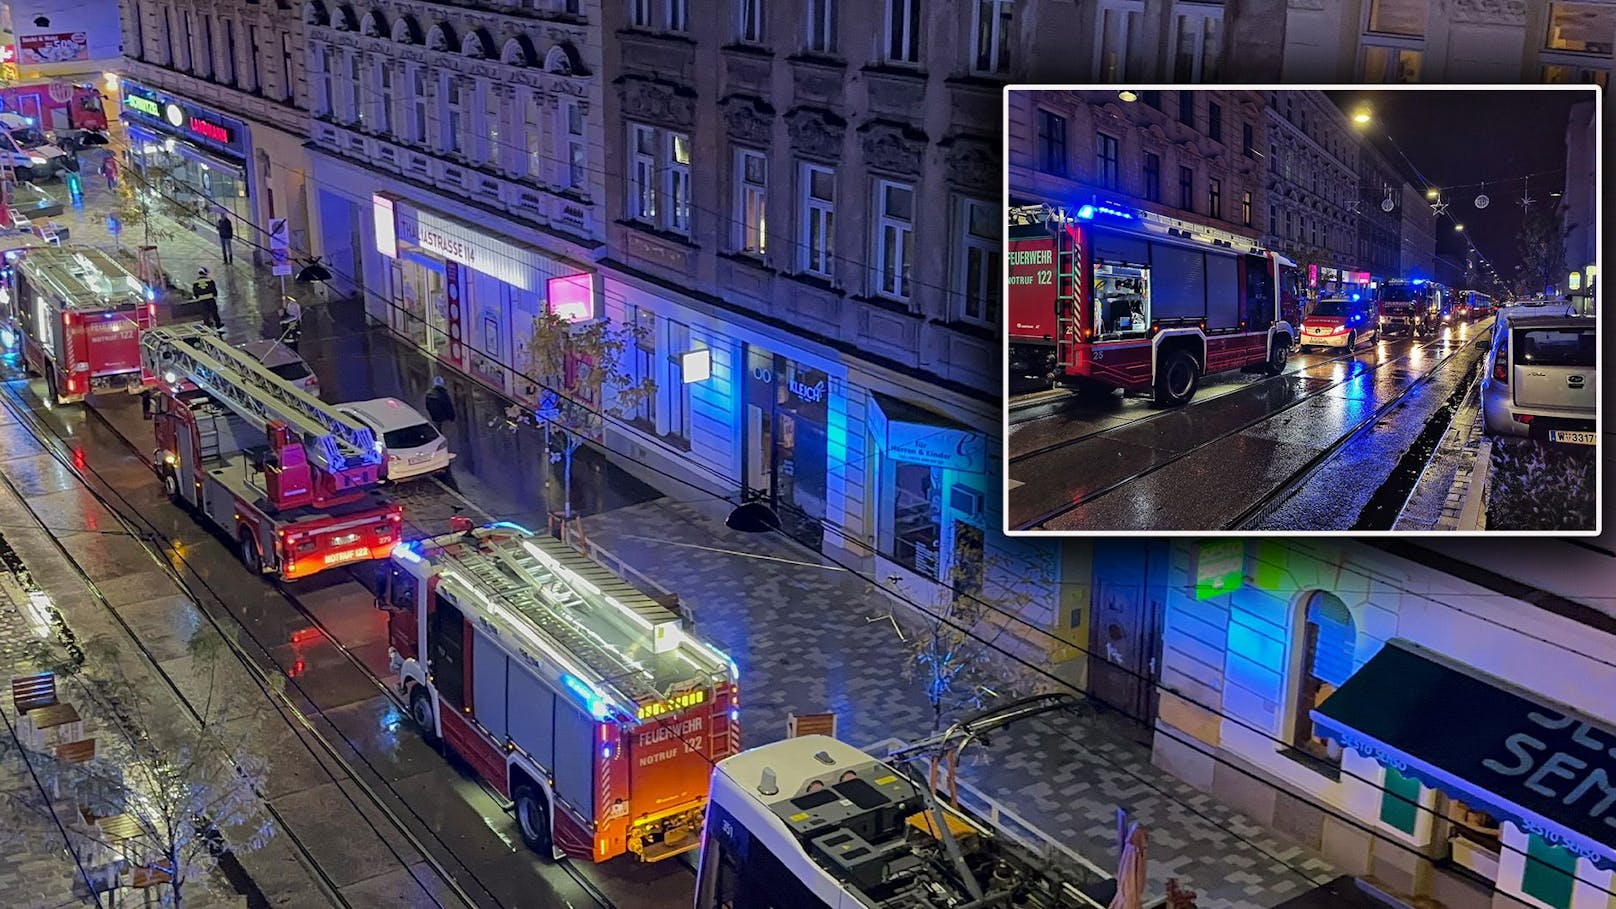 Wegen Kaffeemaschine – Drogerie in Wien fängt Feuer